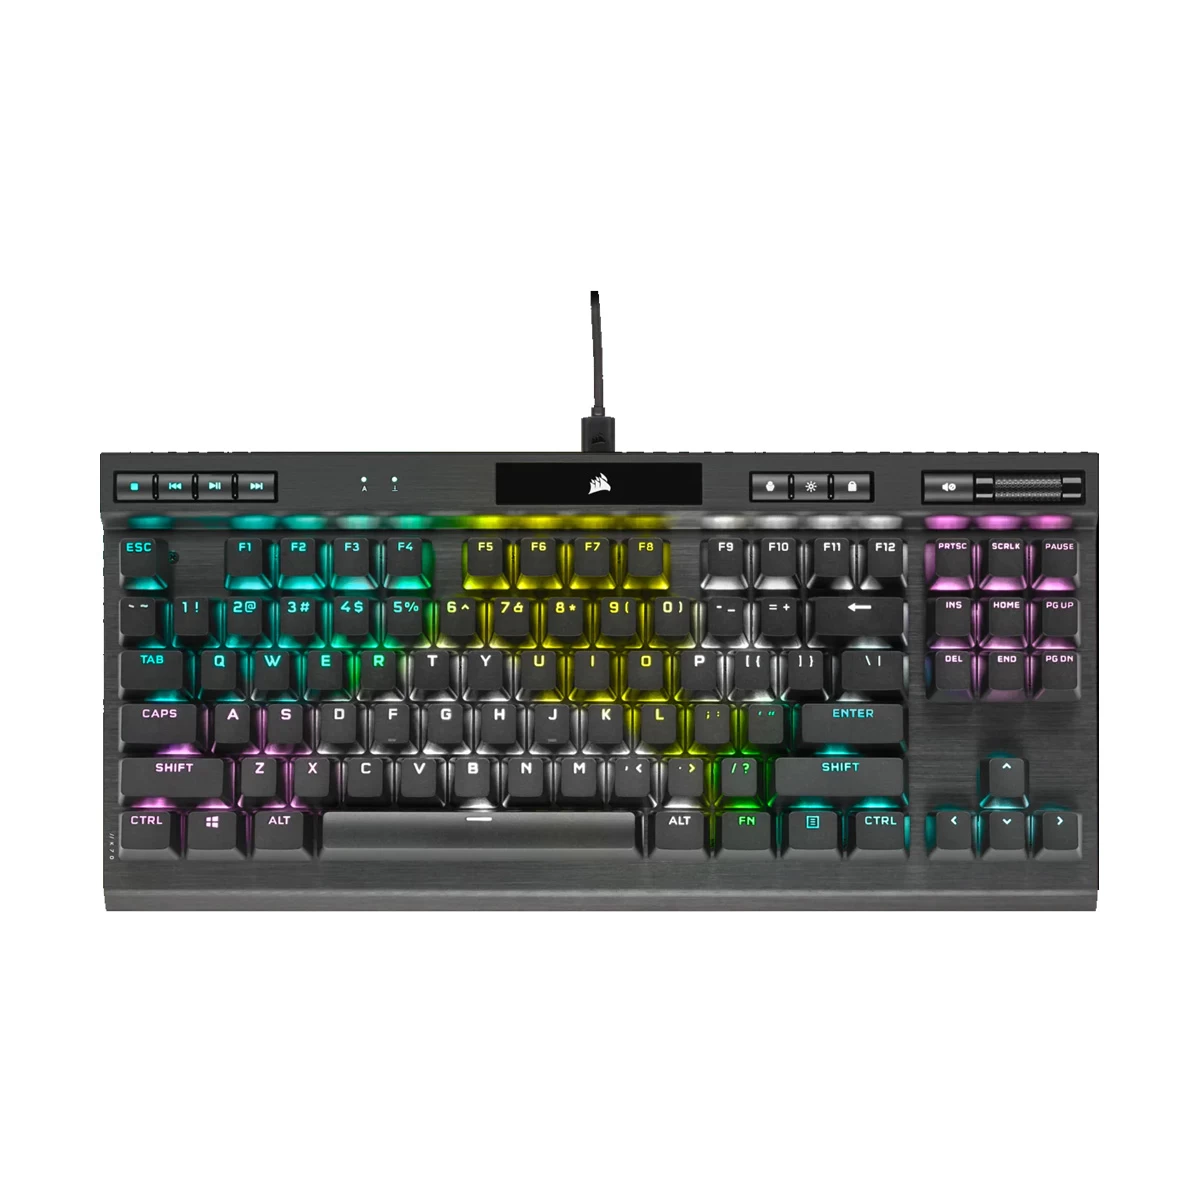 Corsair Champion Series K70 RGB TKL Wired Gaming Keyboard #CH-9119014-NA